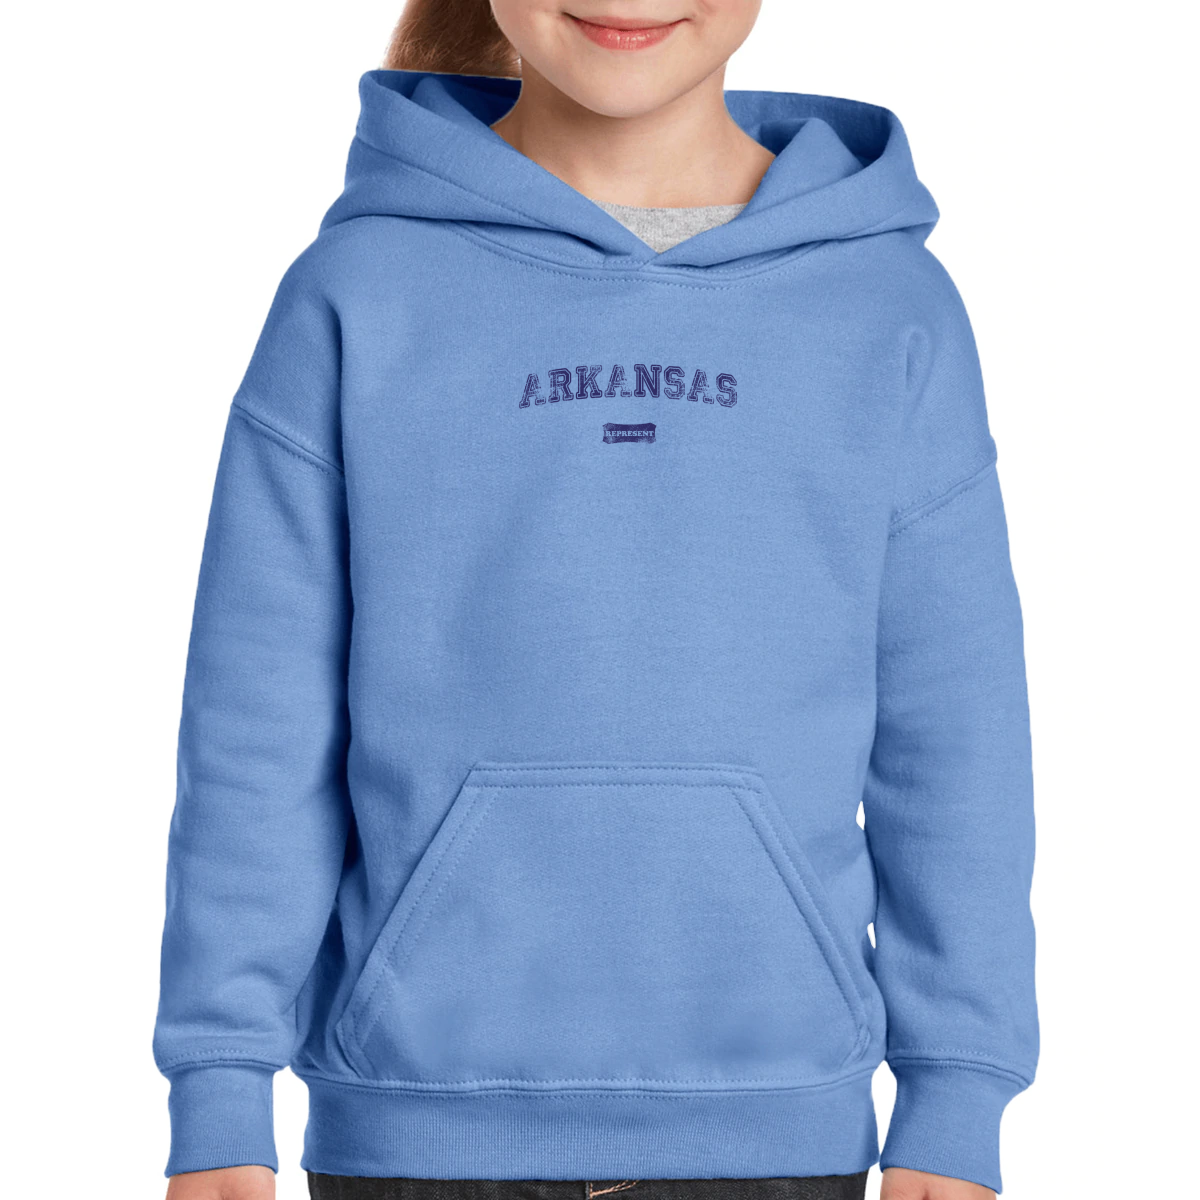 Arkansas Represent Kids Hoodie | Blue